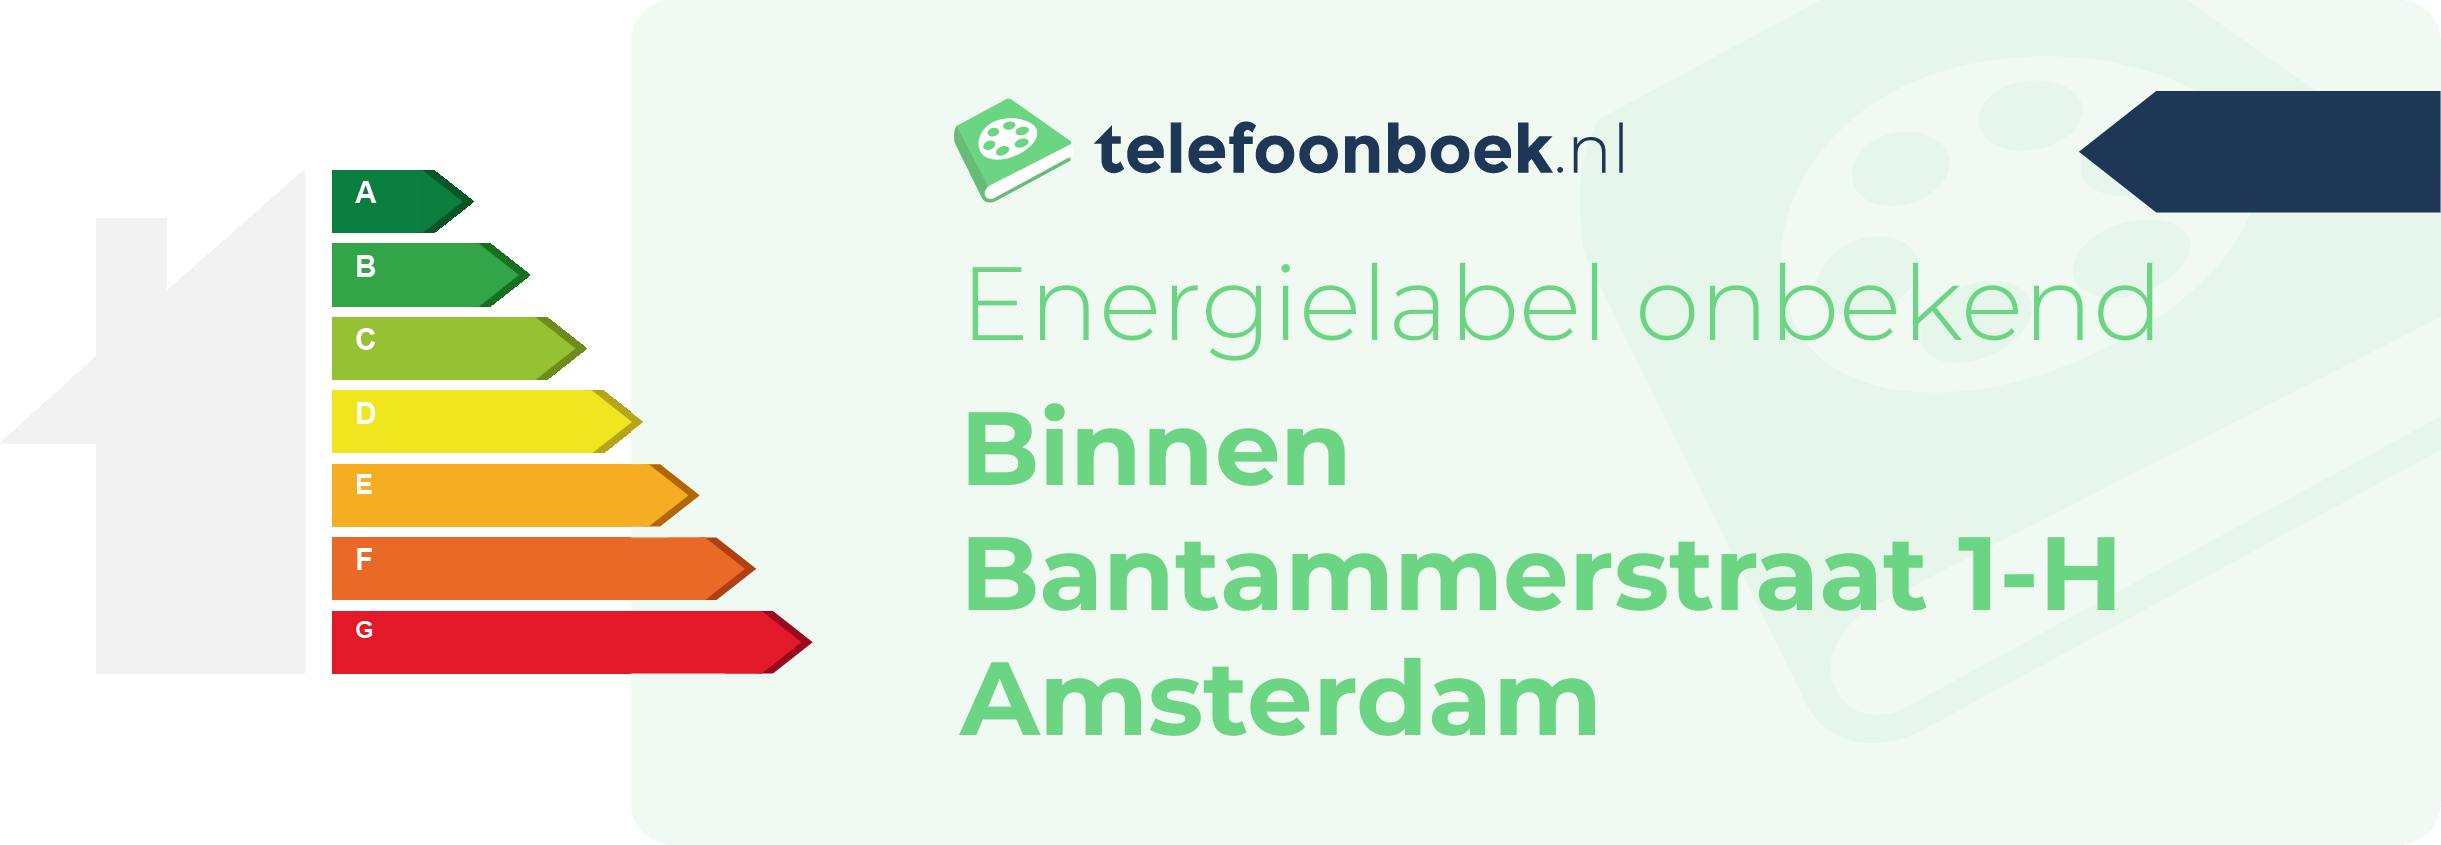 Energielabel Binnen Bantammerstraat 1-H Amsterdam